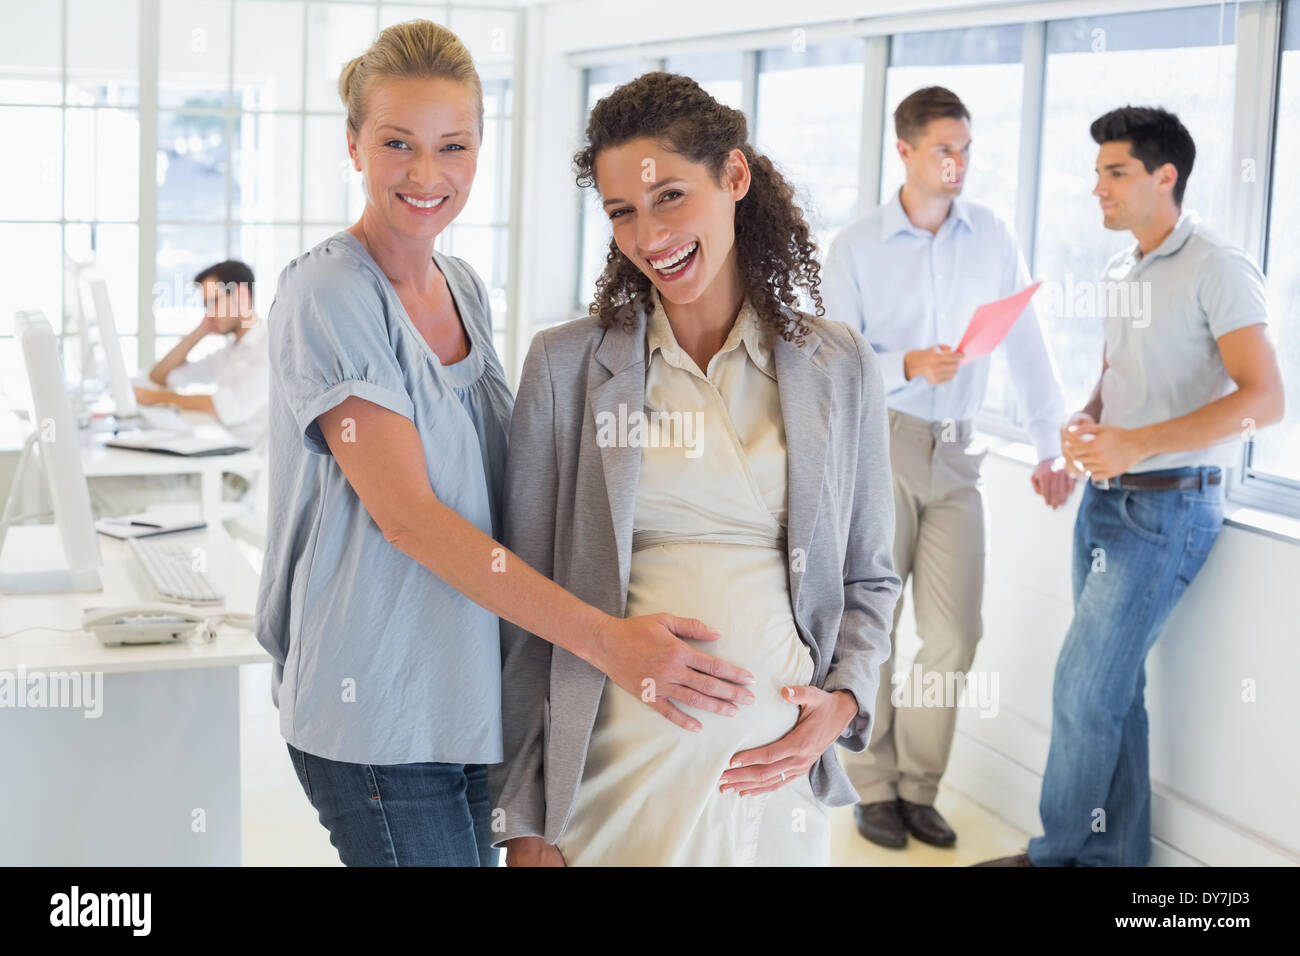 Lässige Geschäftsfrau berühren Bauch schwanger Kollegen Stockfoto